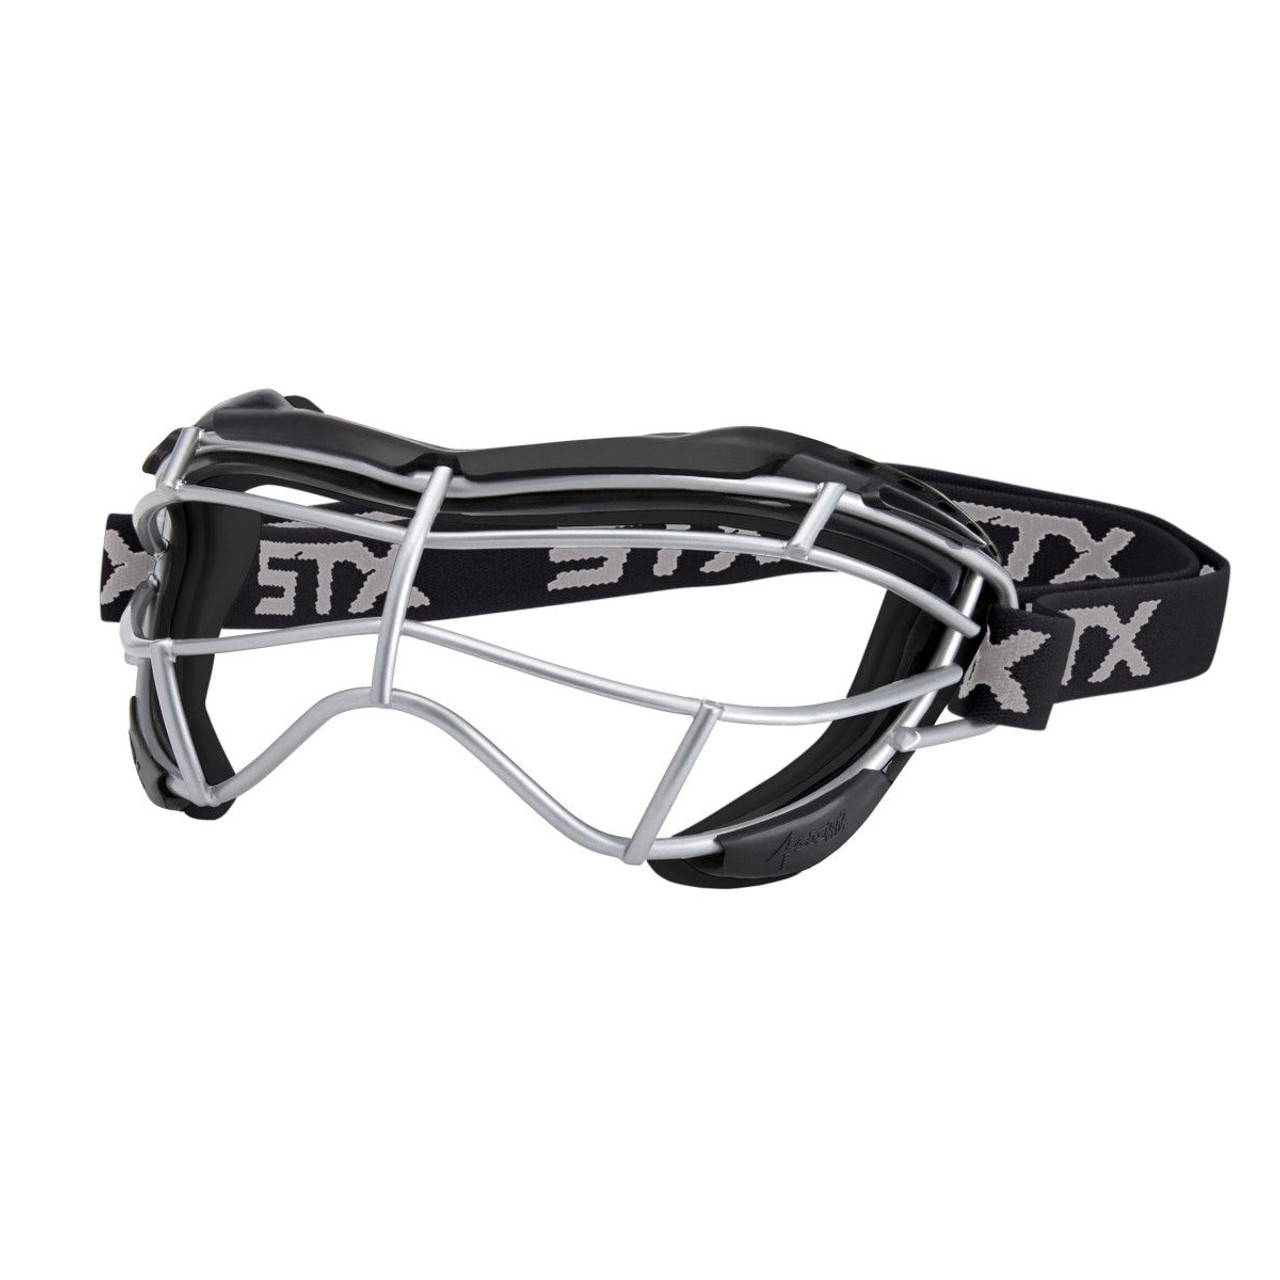 NWT STX 4Sight Focus TI-S Lacrosse Goggles Retail $84.99 